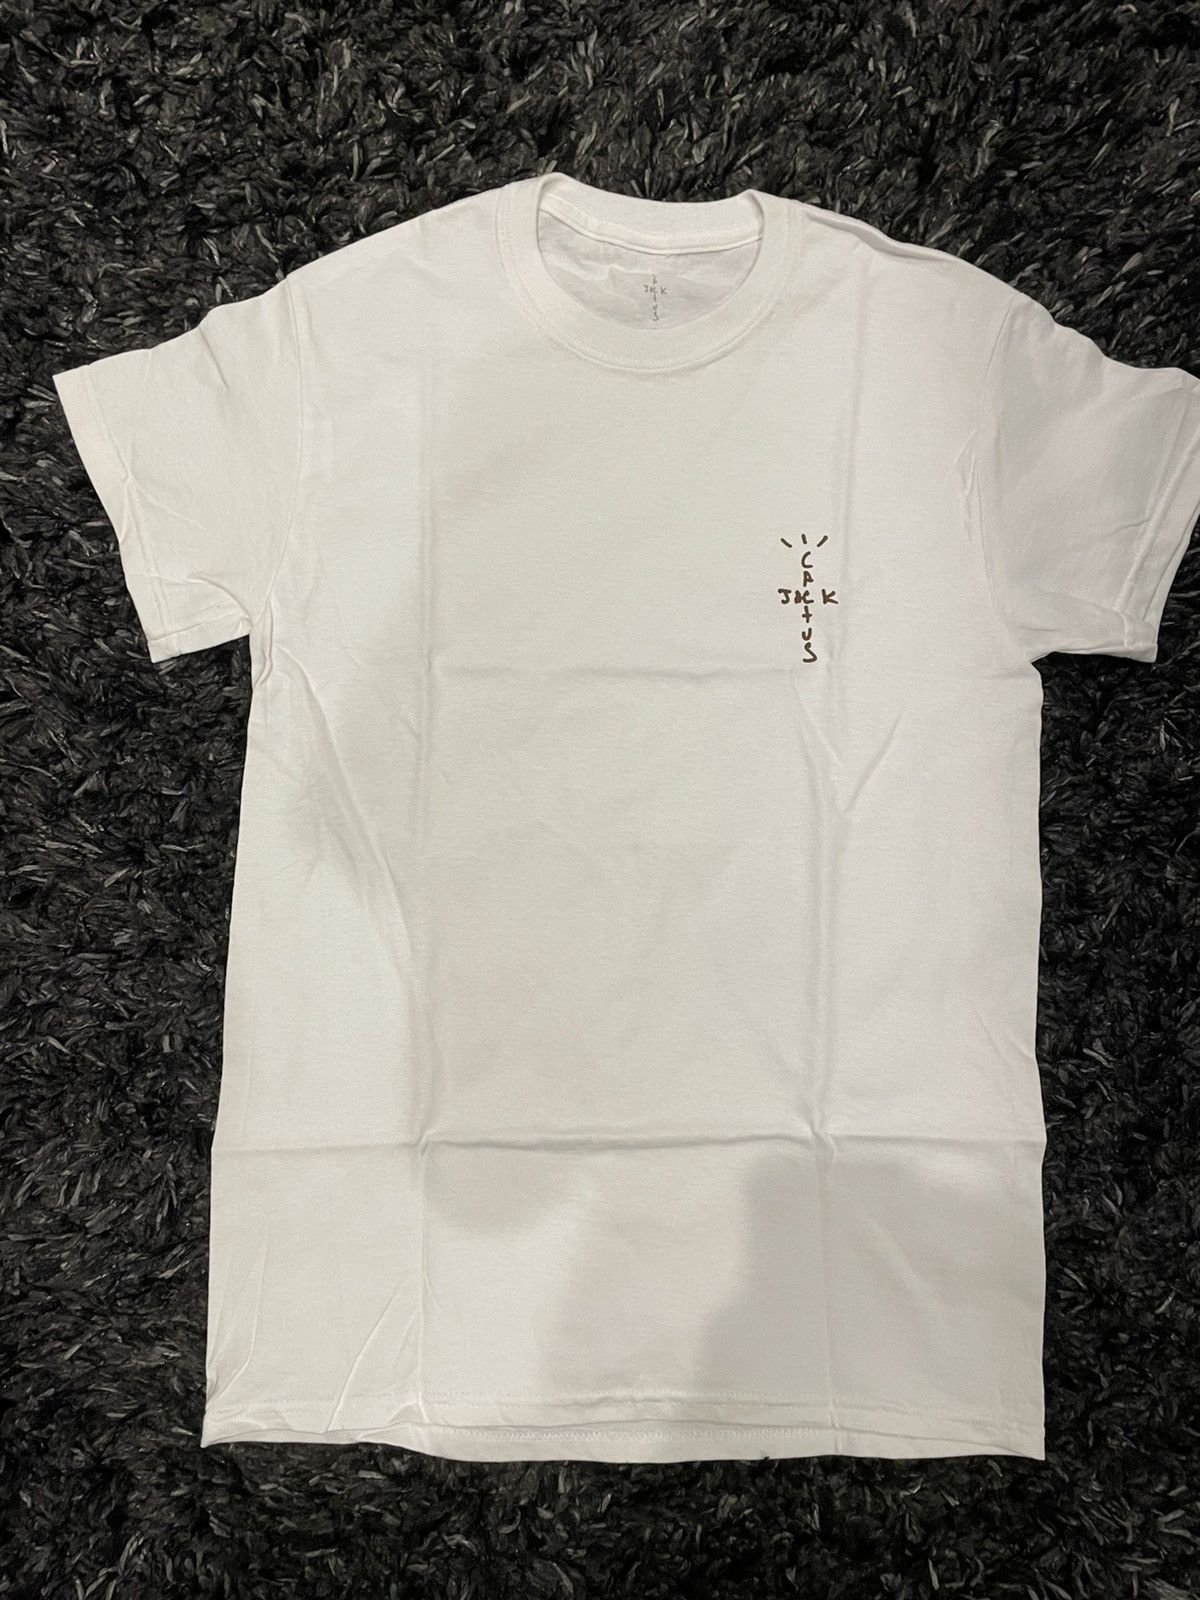 Travis Scott Travis Scott Cactus Jack CJ White Tees T-Shirt 3 Pack small |  Grailed